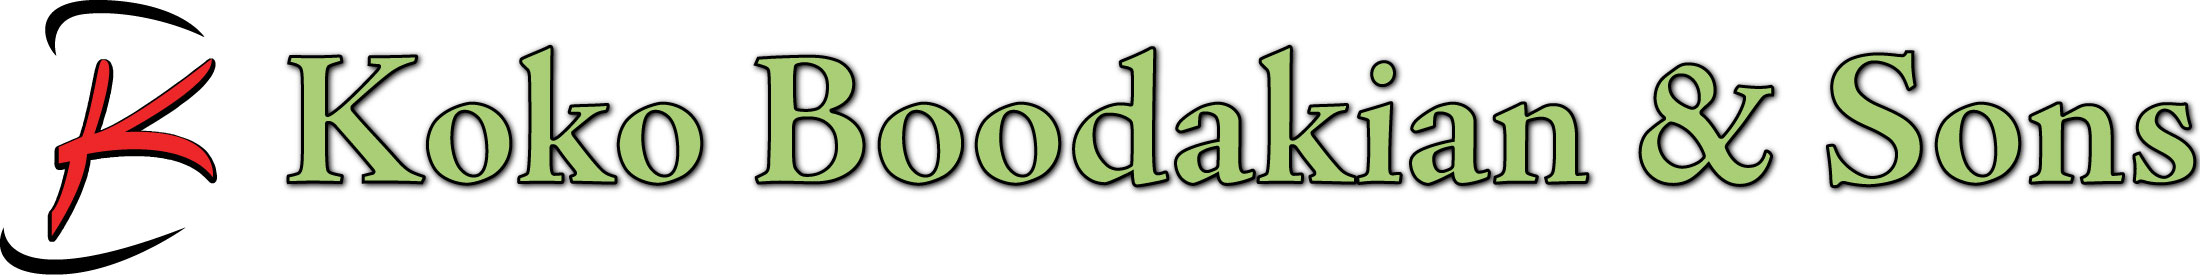 Koko Boodakian & Sons, Inc. logo